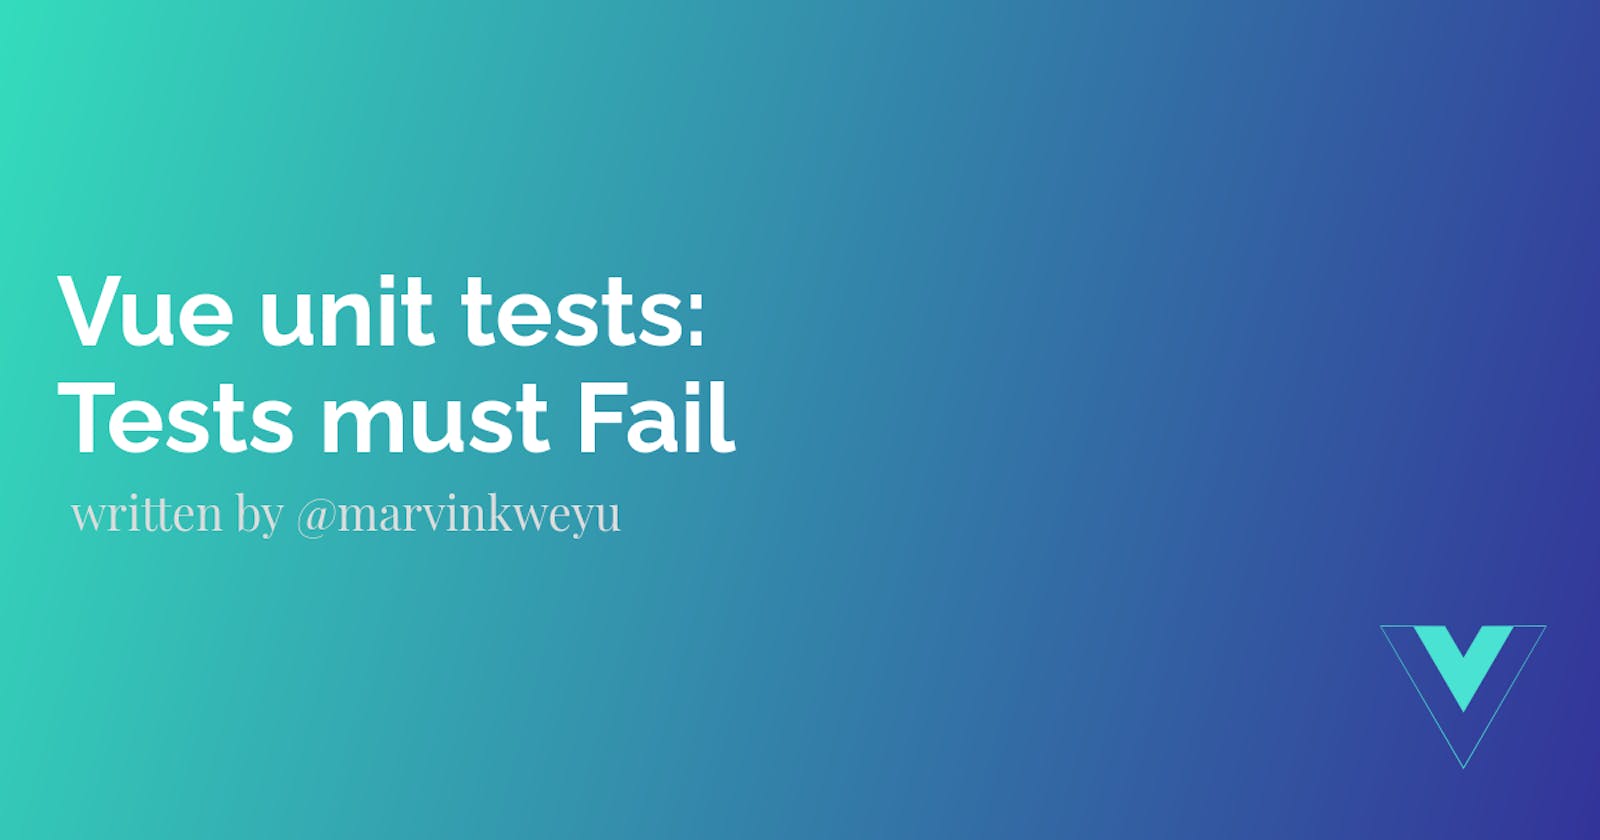 Vue unit testing: Tests must fail